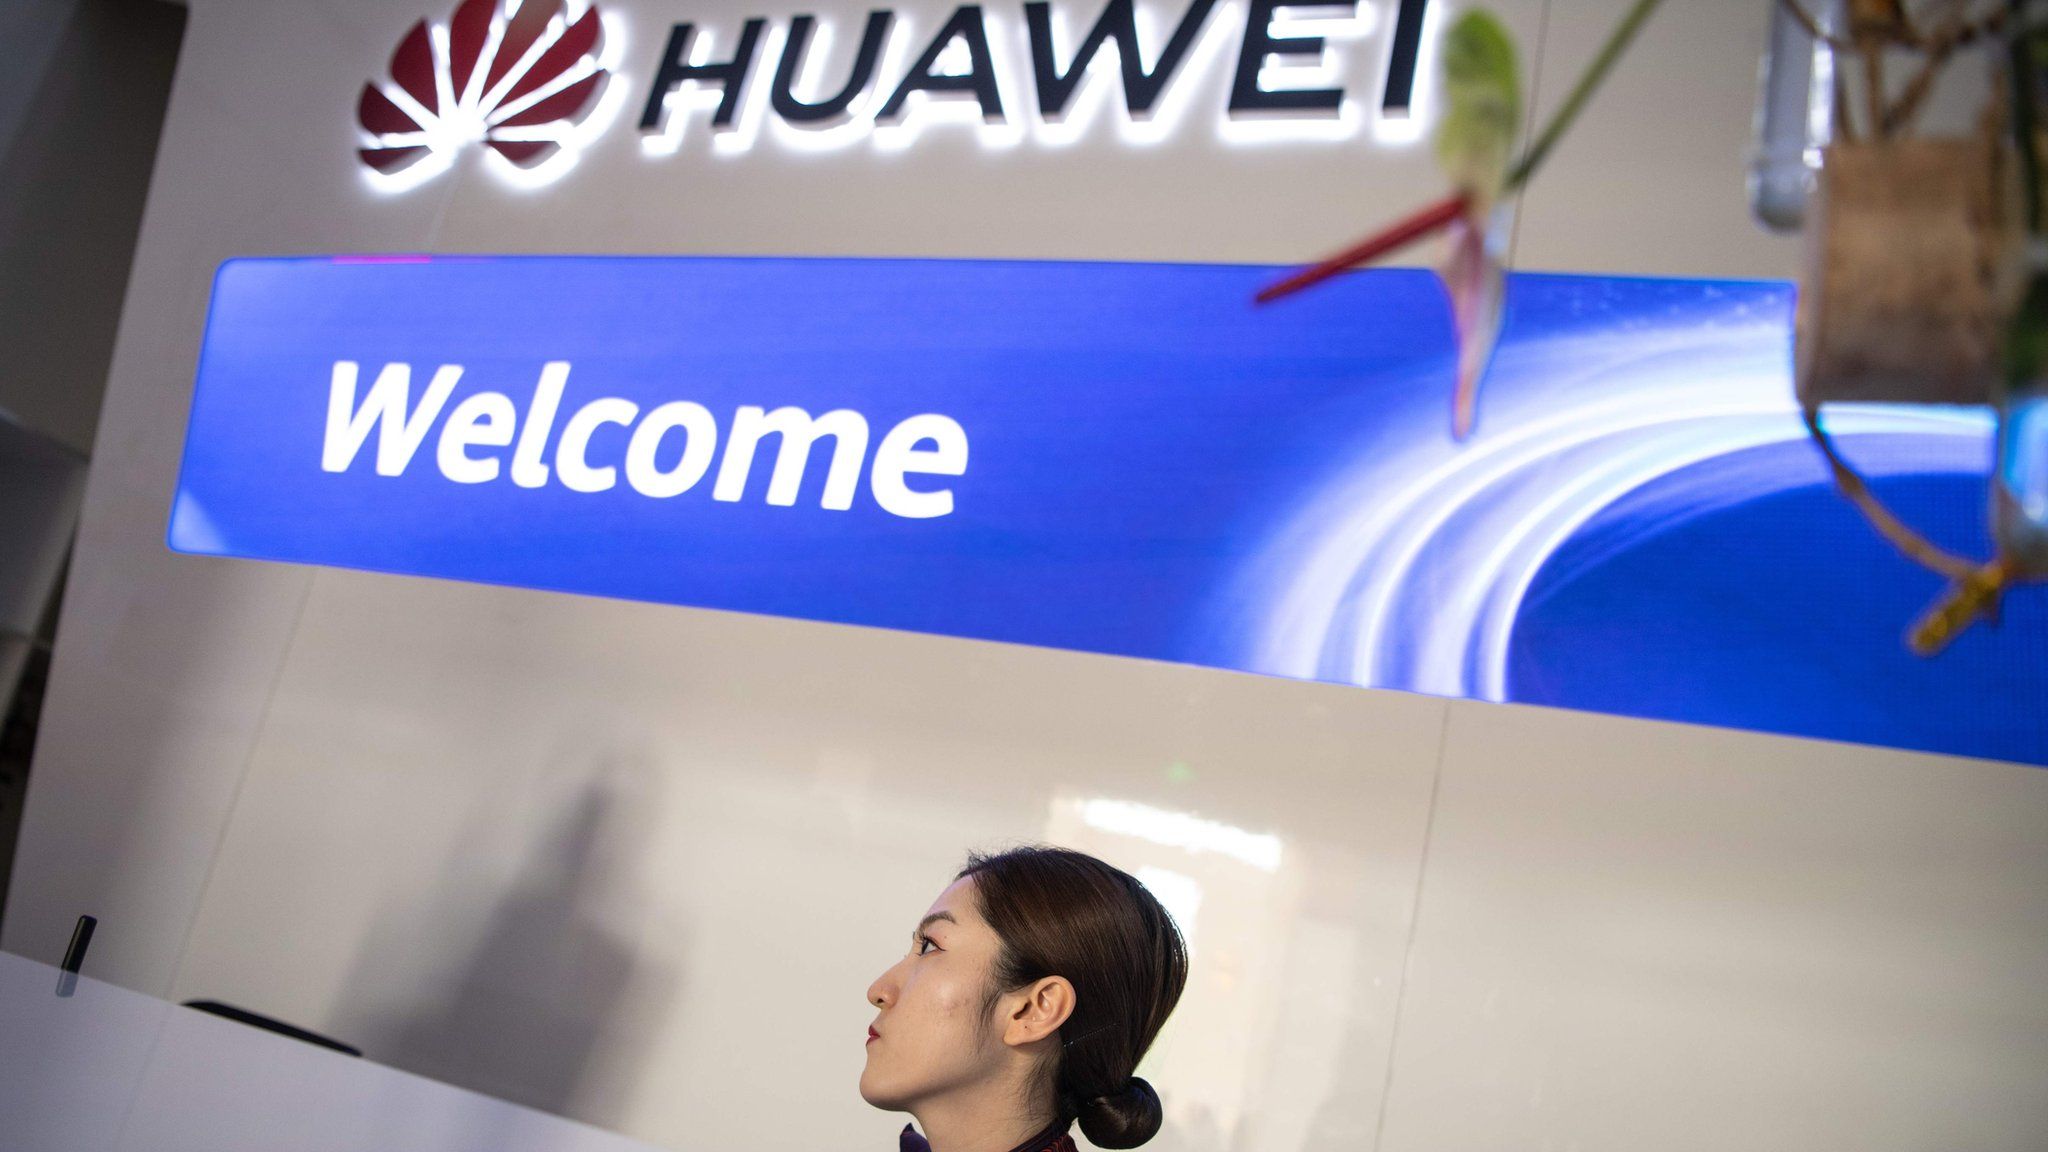 Huawei welcome desk